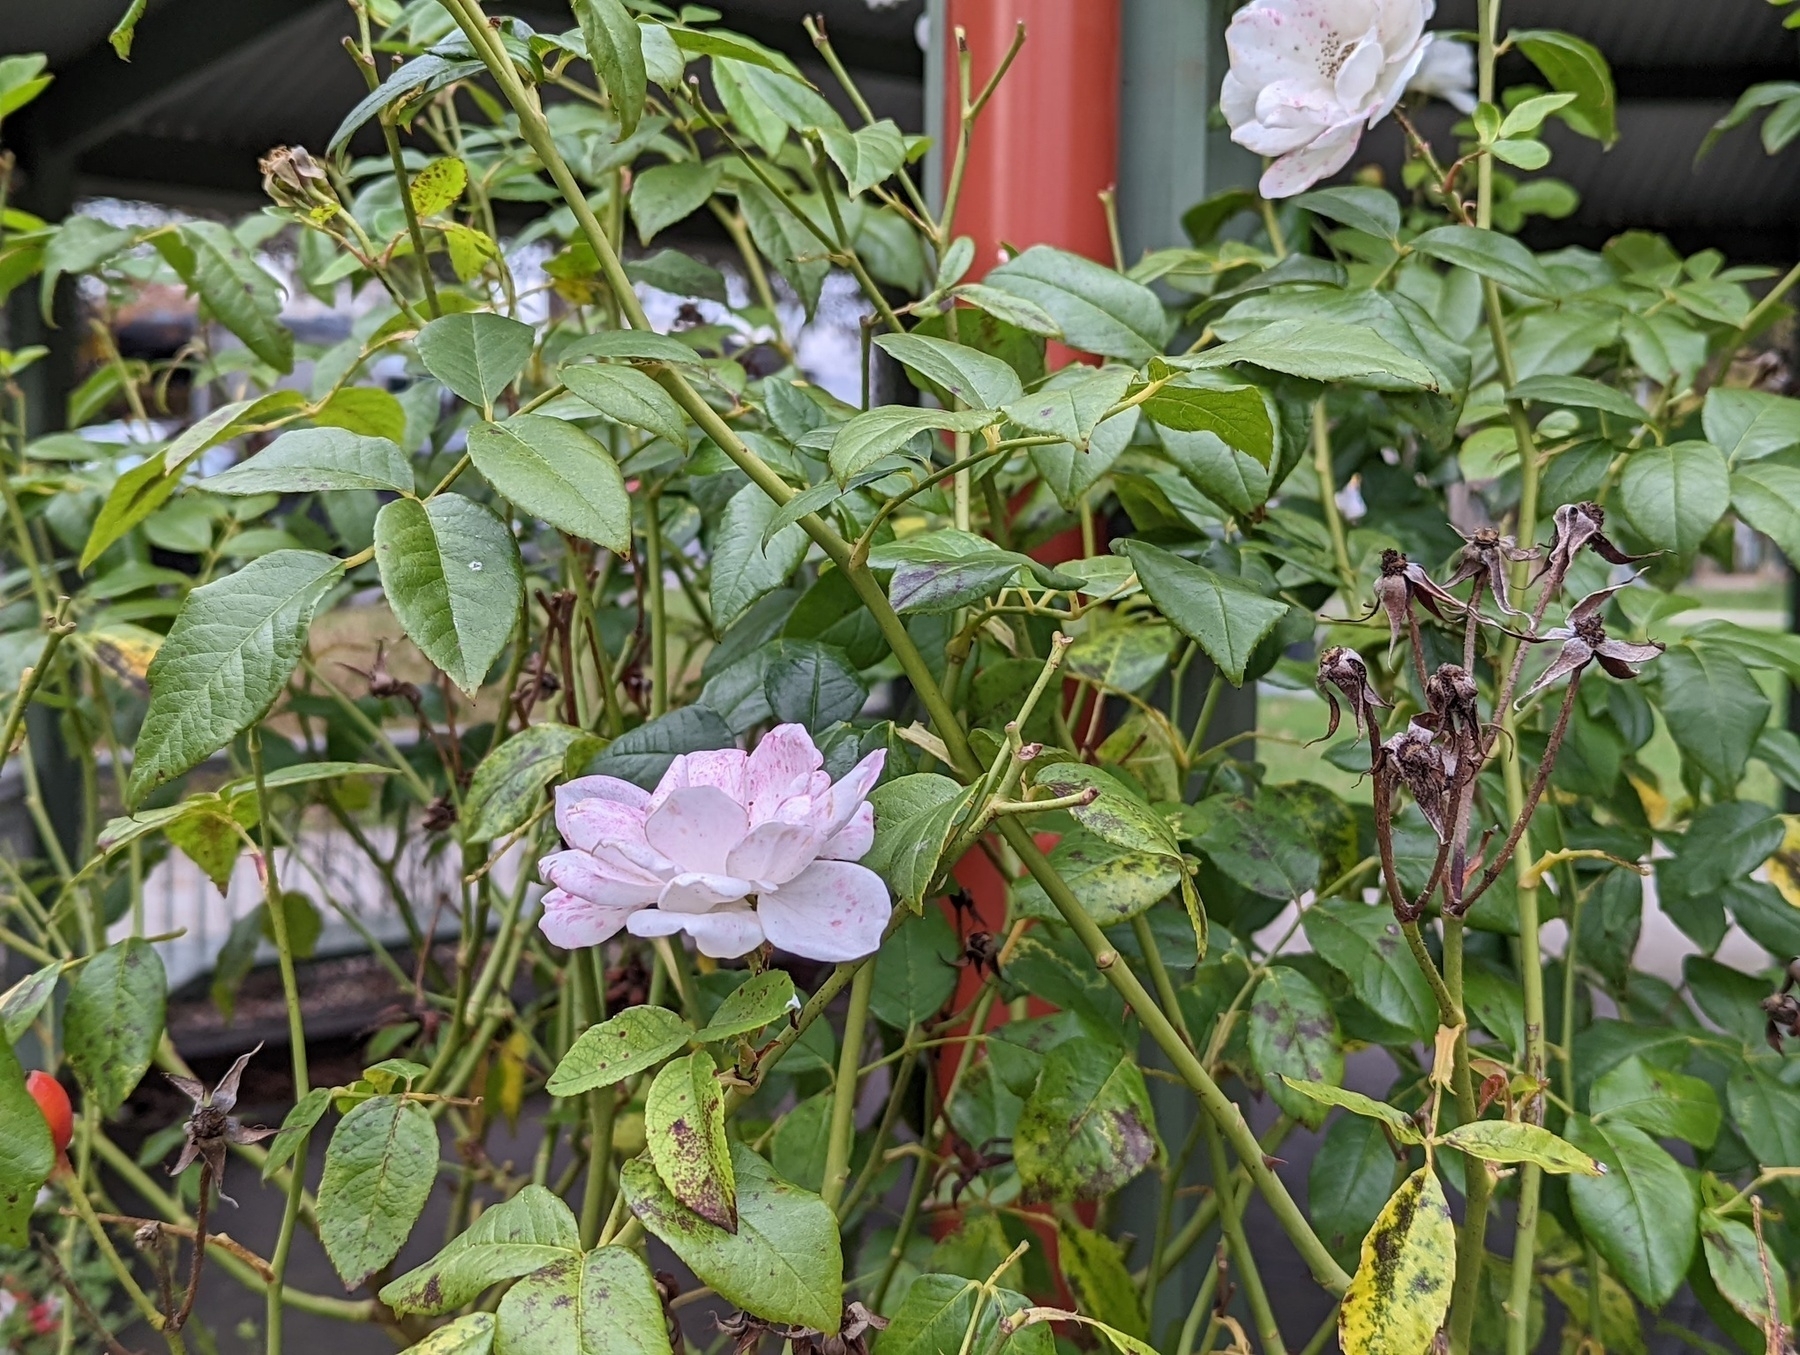 A formally thorny rose bush